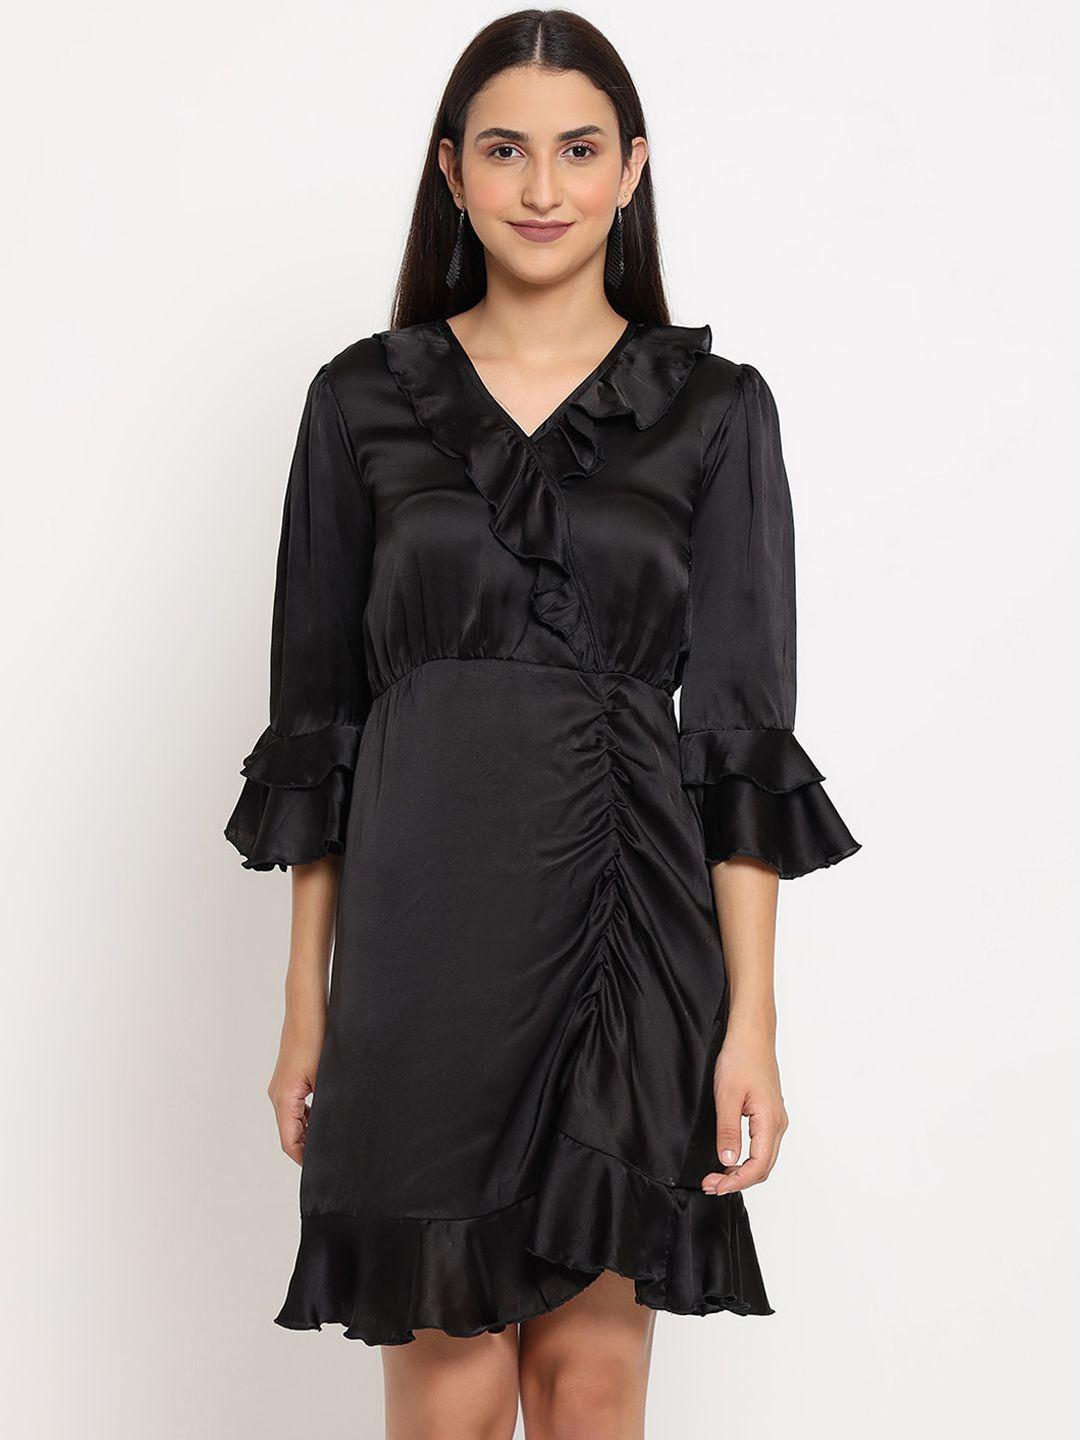 marc louis black satin dress